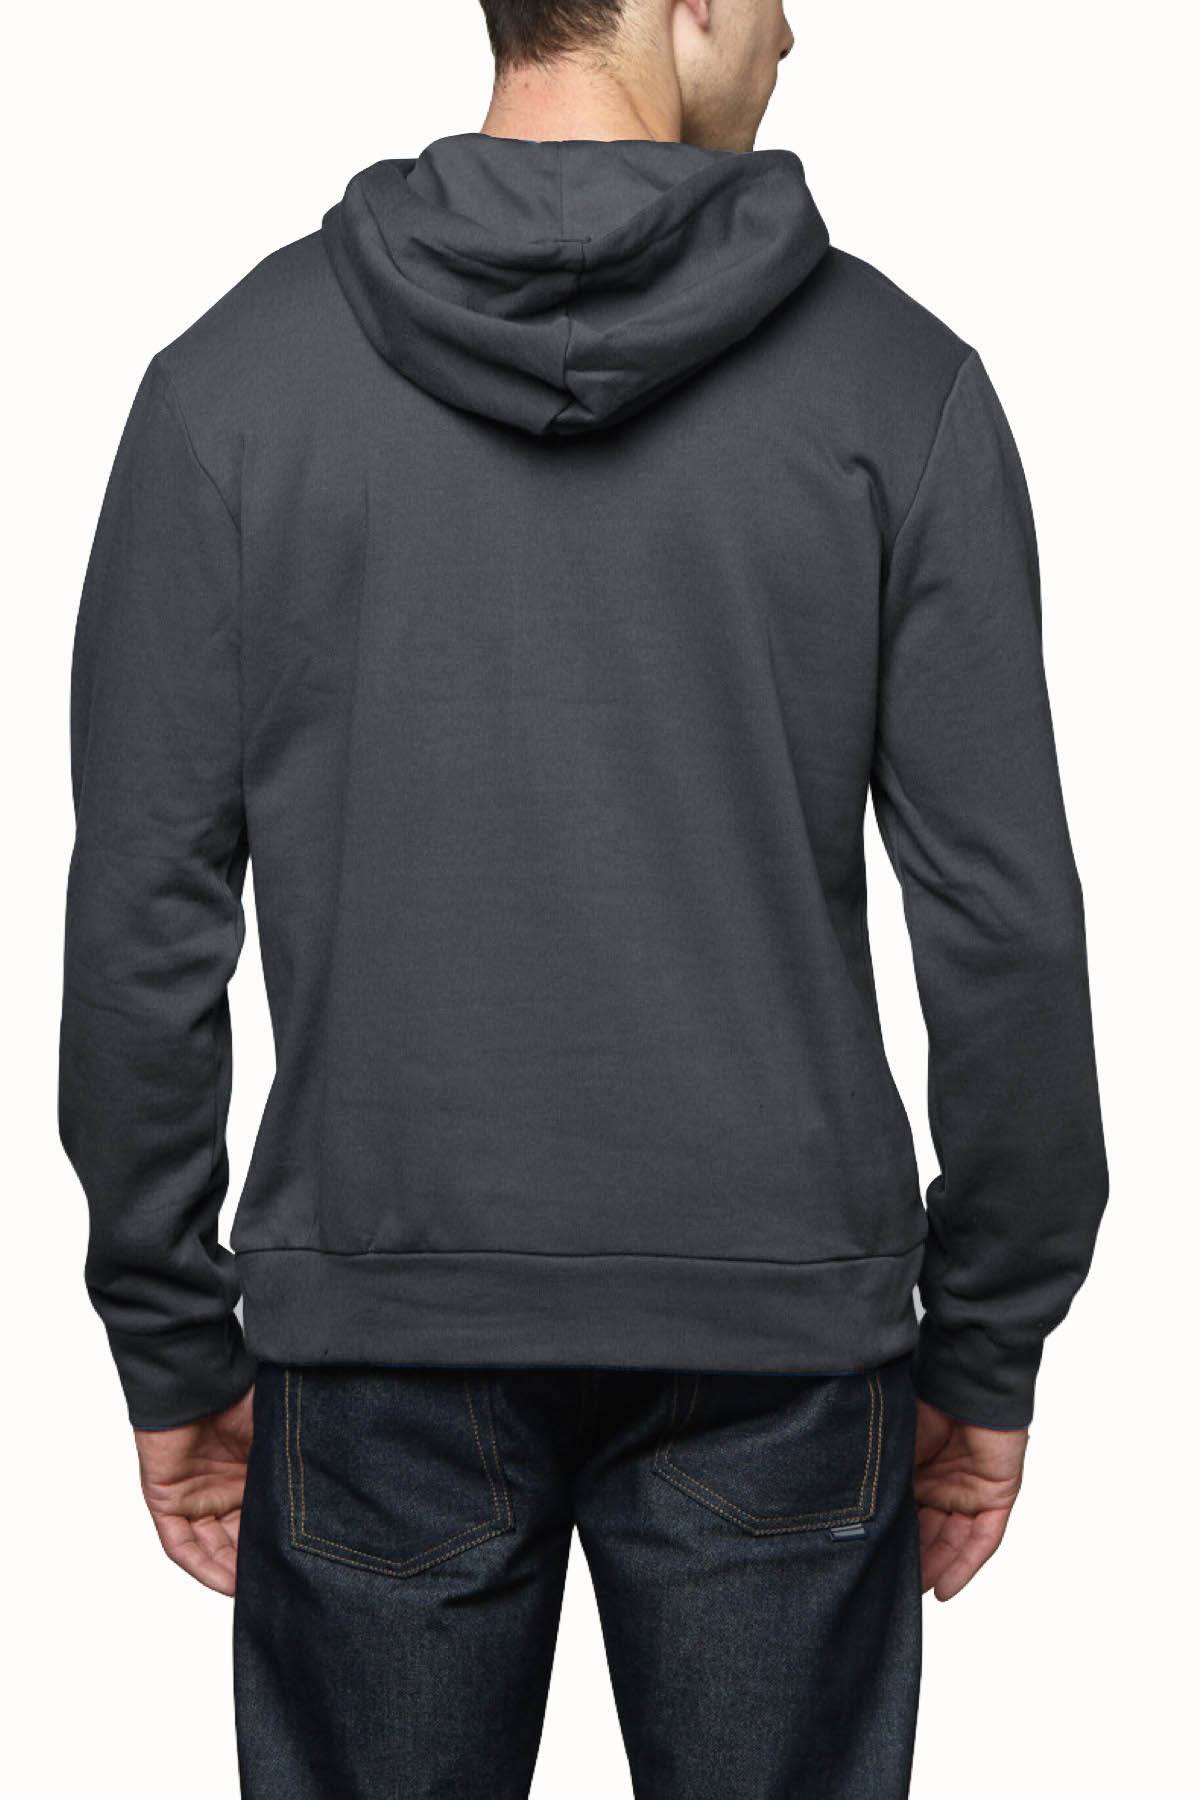 Zutoq Dark Grey Zunked Hooded Sweatshirt